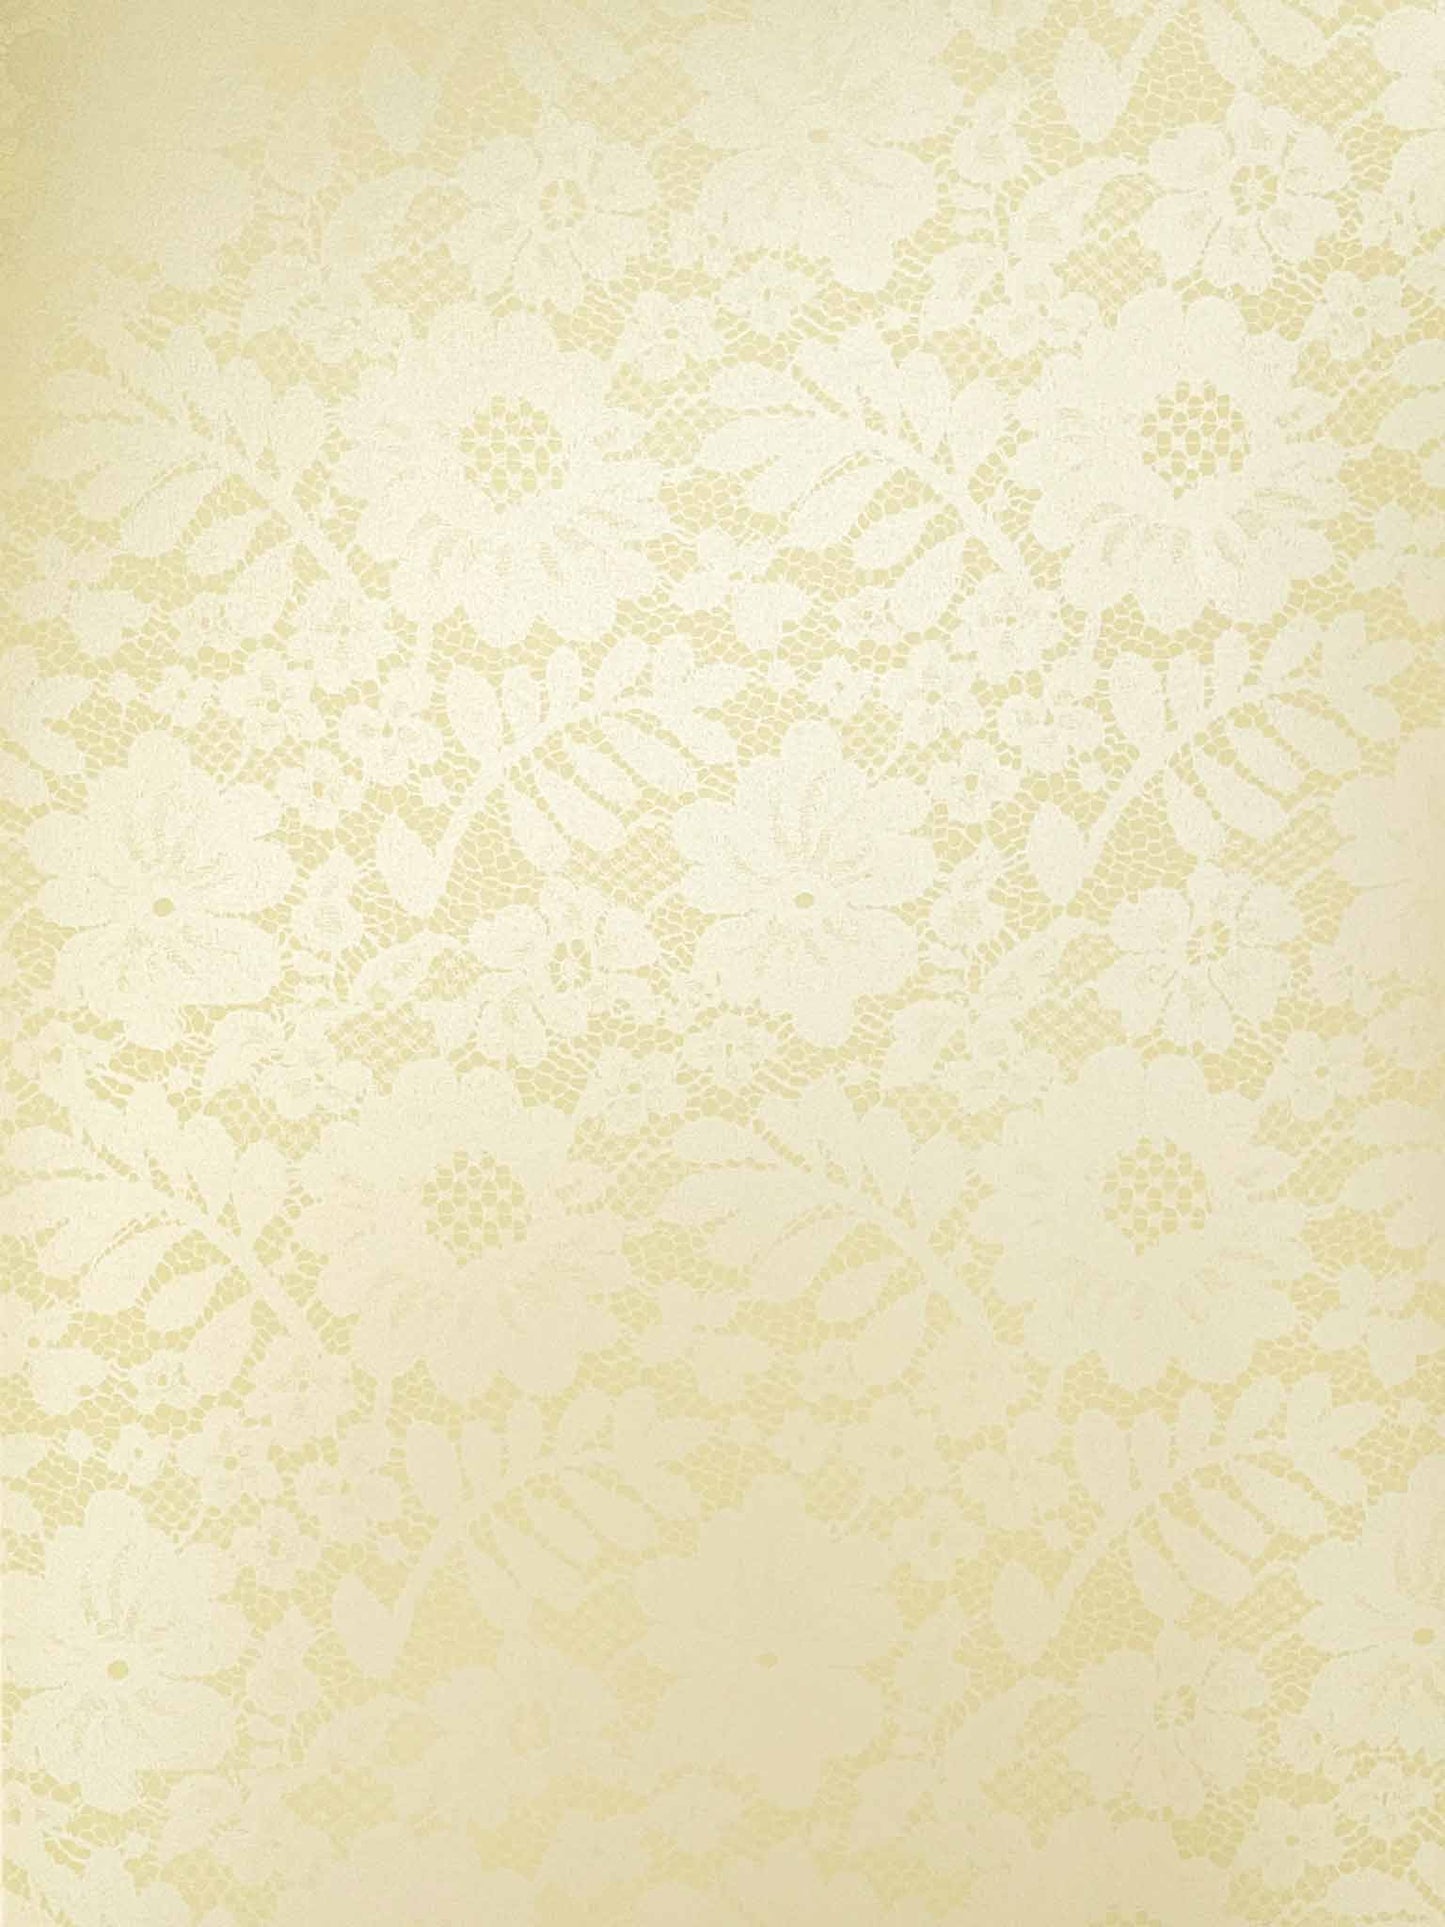 Chantilly Lace Paper in Light Cream  ImagineDIY   